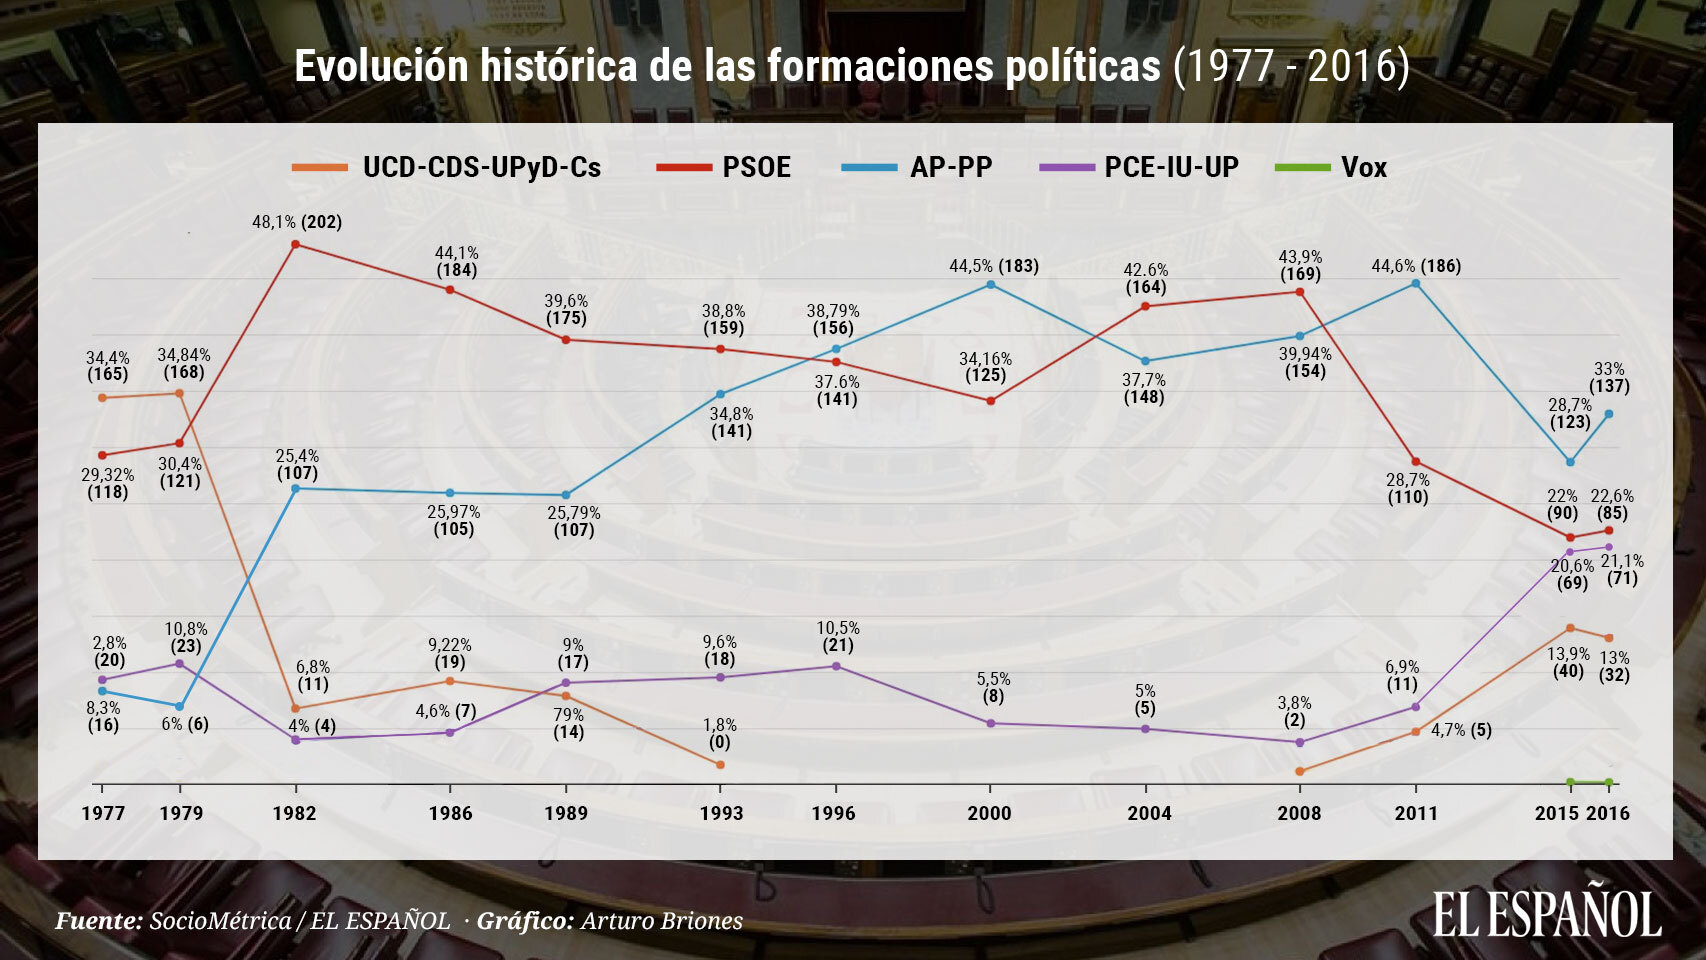 Evolución histórica de las familias políticas en España desde 1977 hasta hoy.